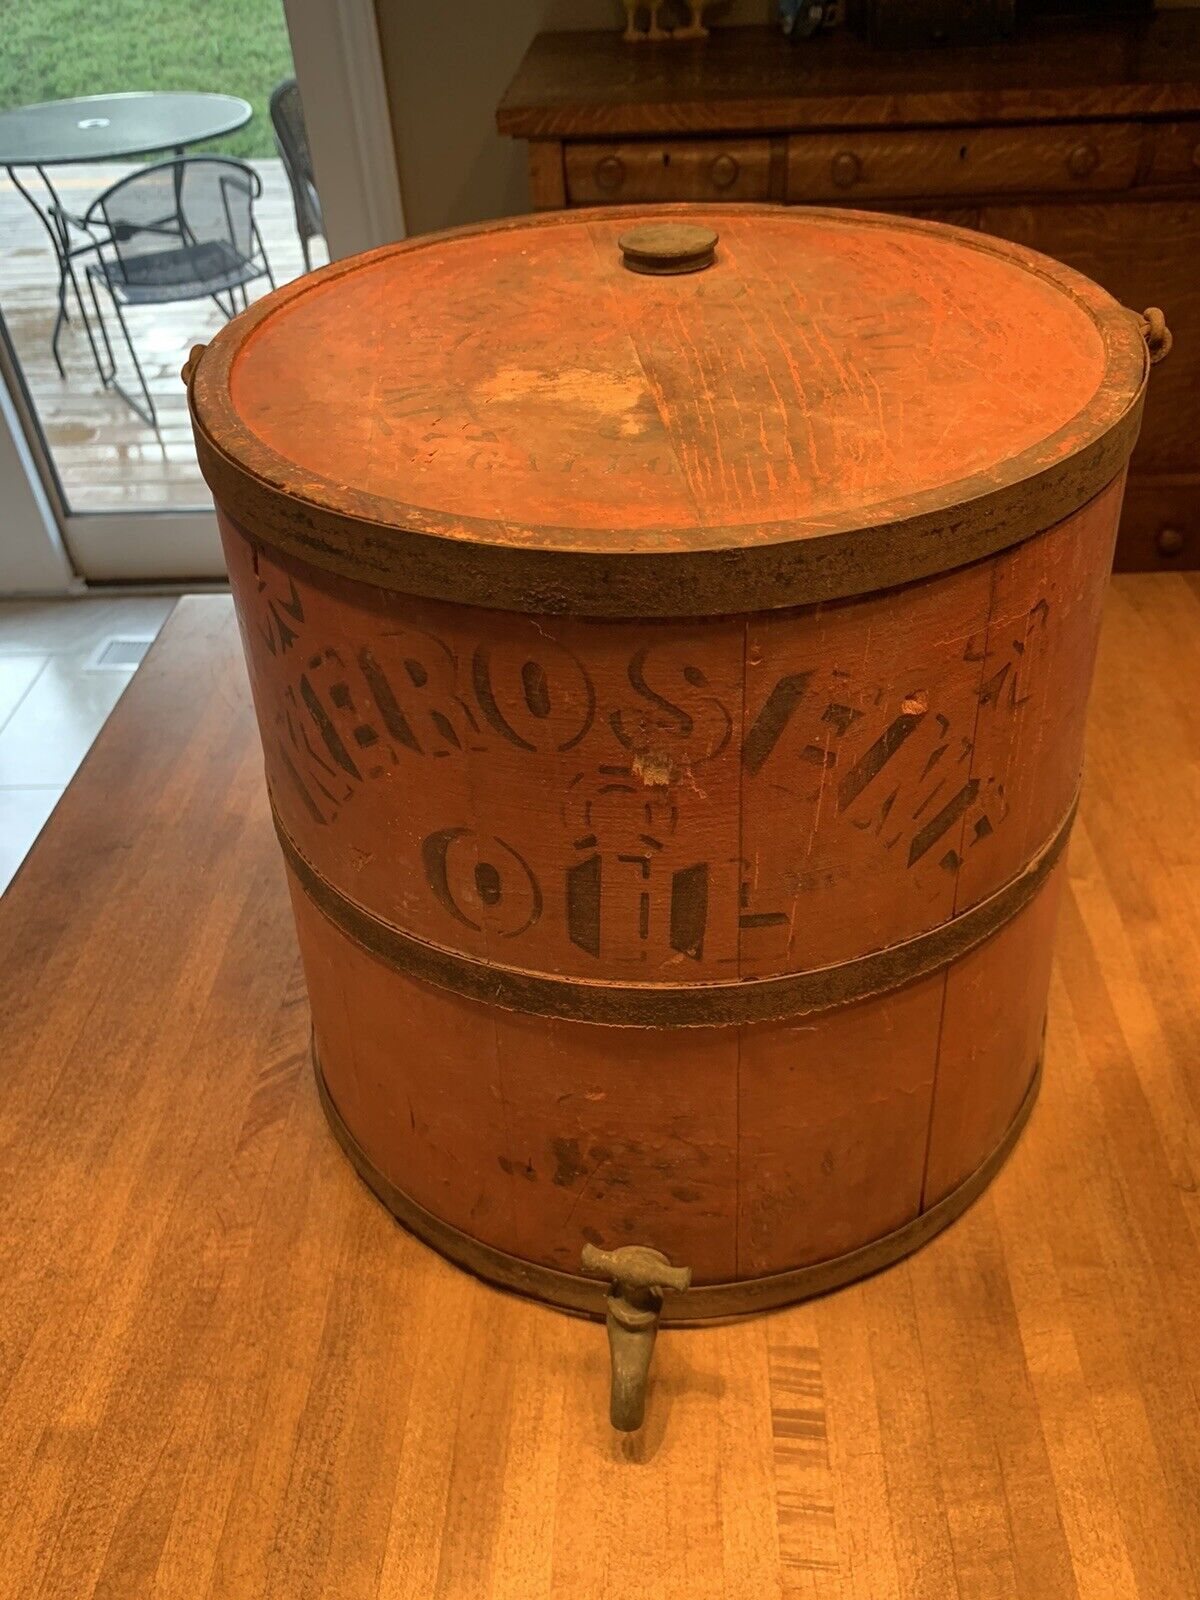 Antique Kerosene Oil Can - Dispenser - Stenciled Wood - Farm - Country Display